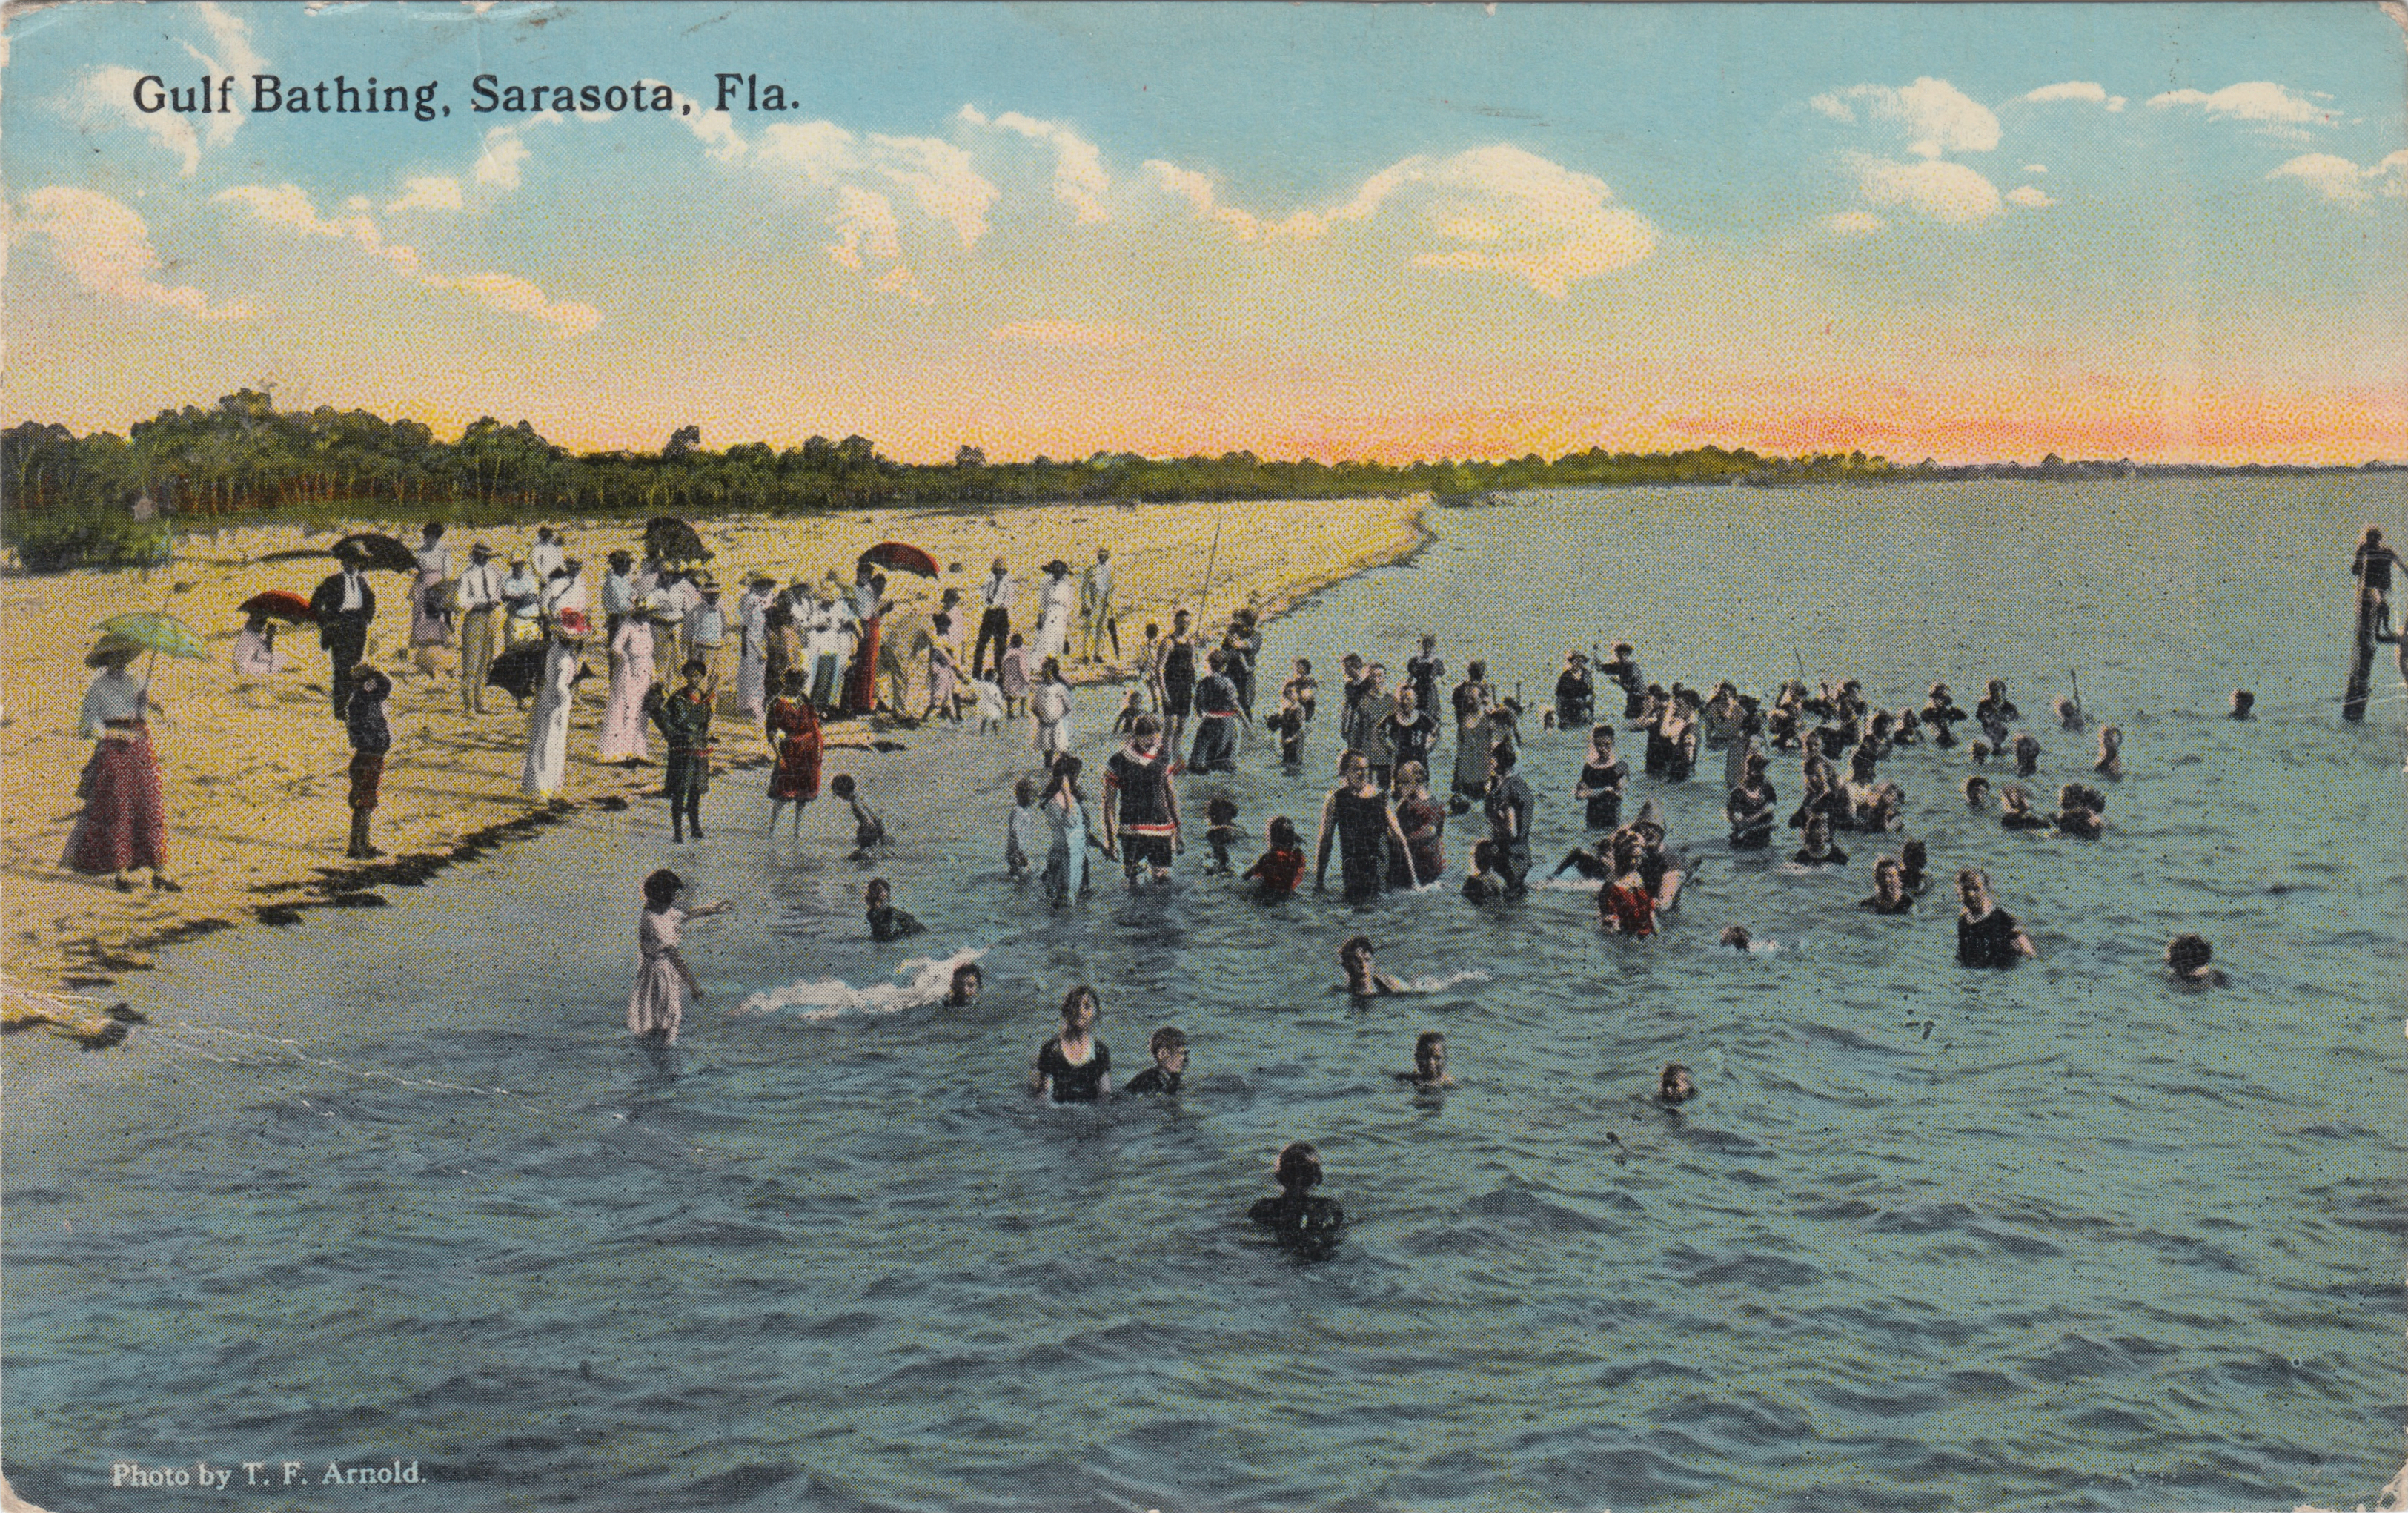 Vintage postcard of people on a beach in Sarasota